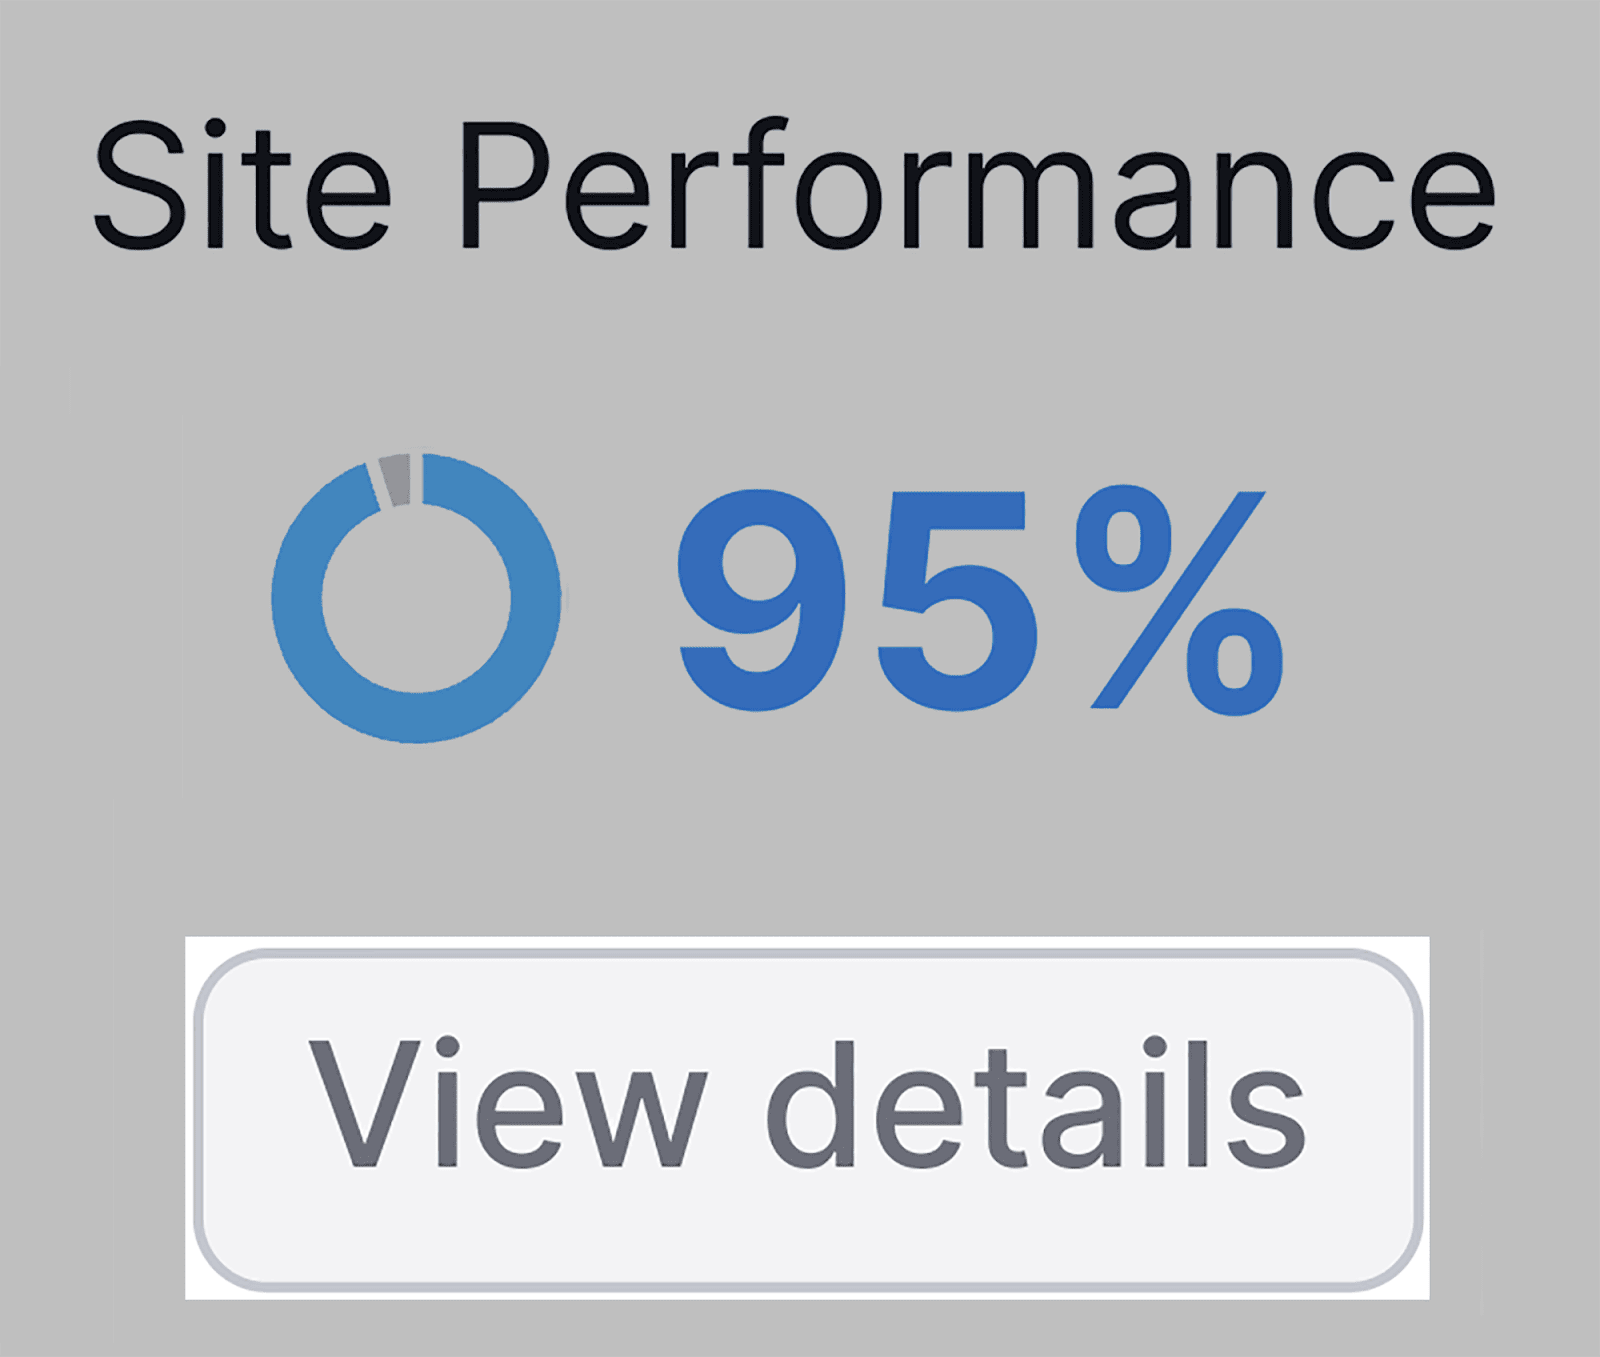 Site performance details